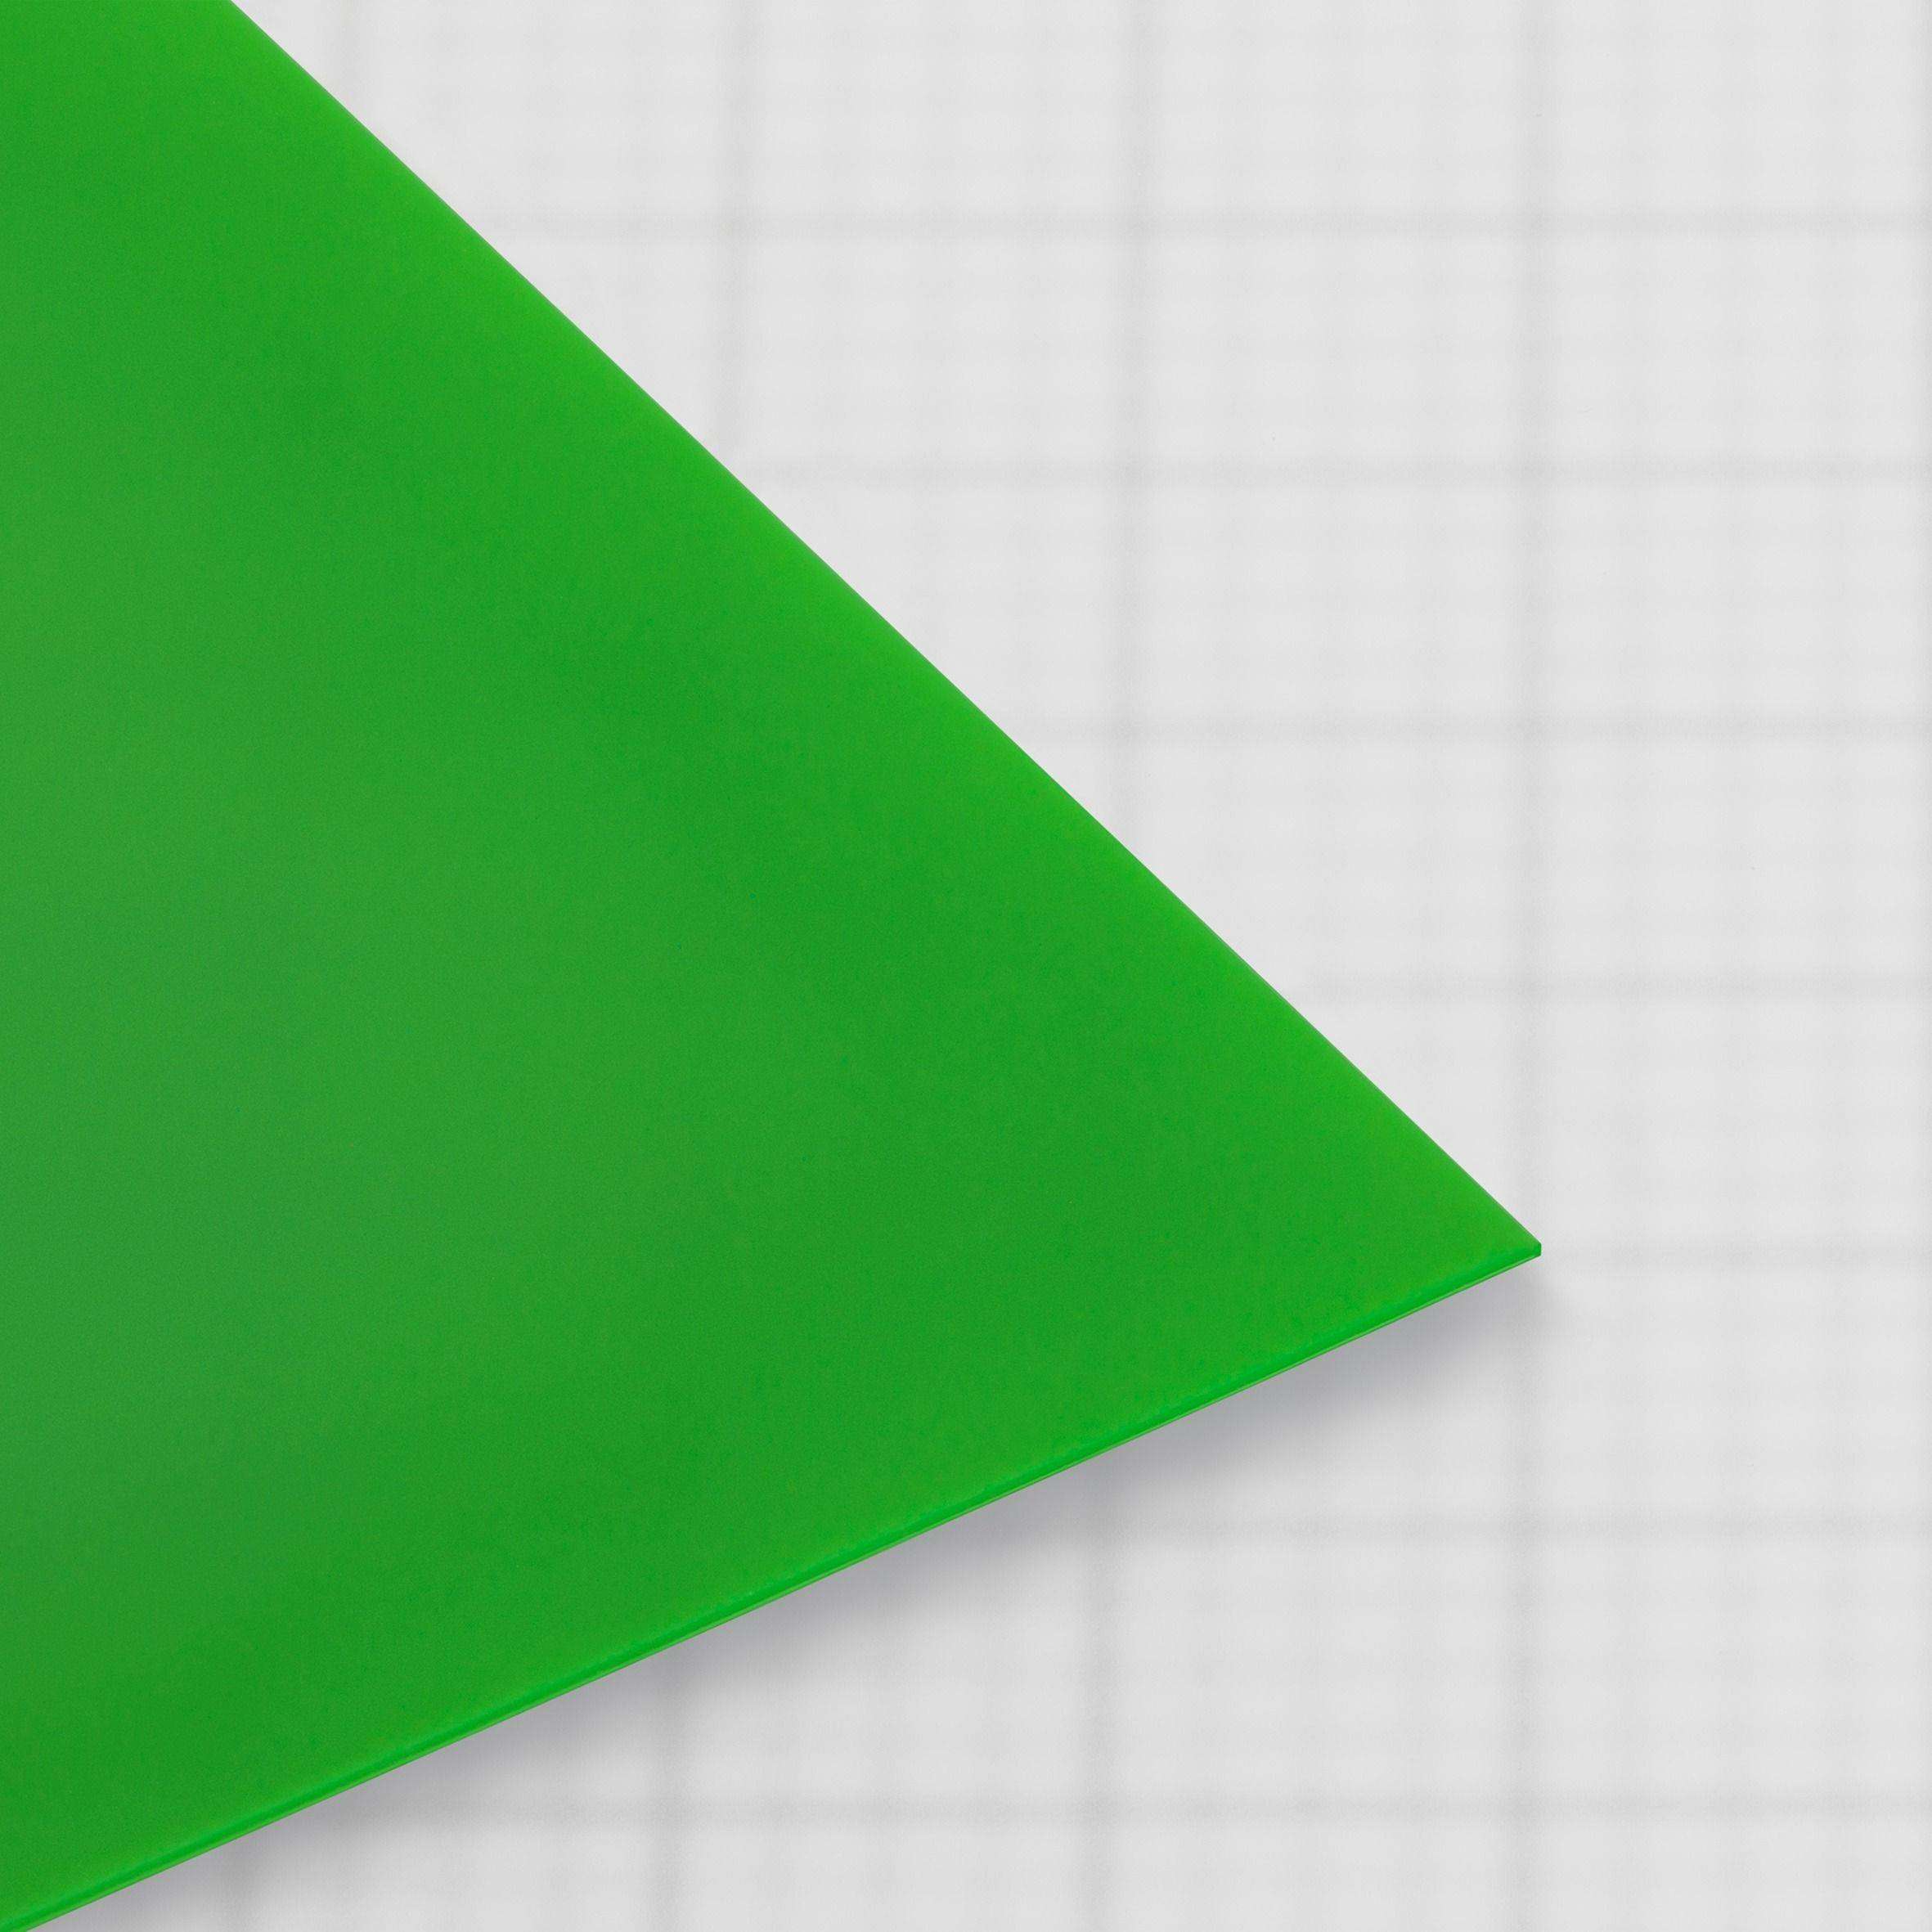 Silikon flach ausgerollt Platte grün